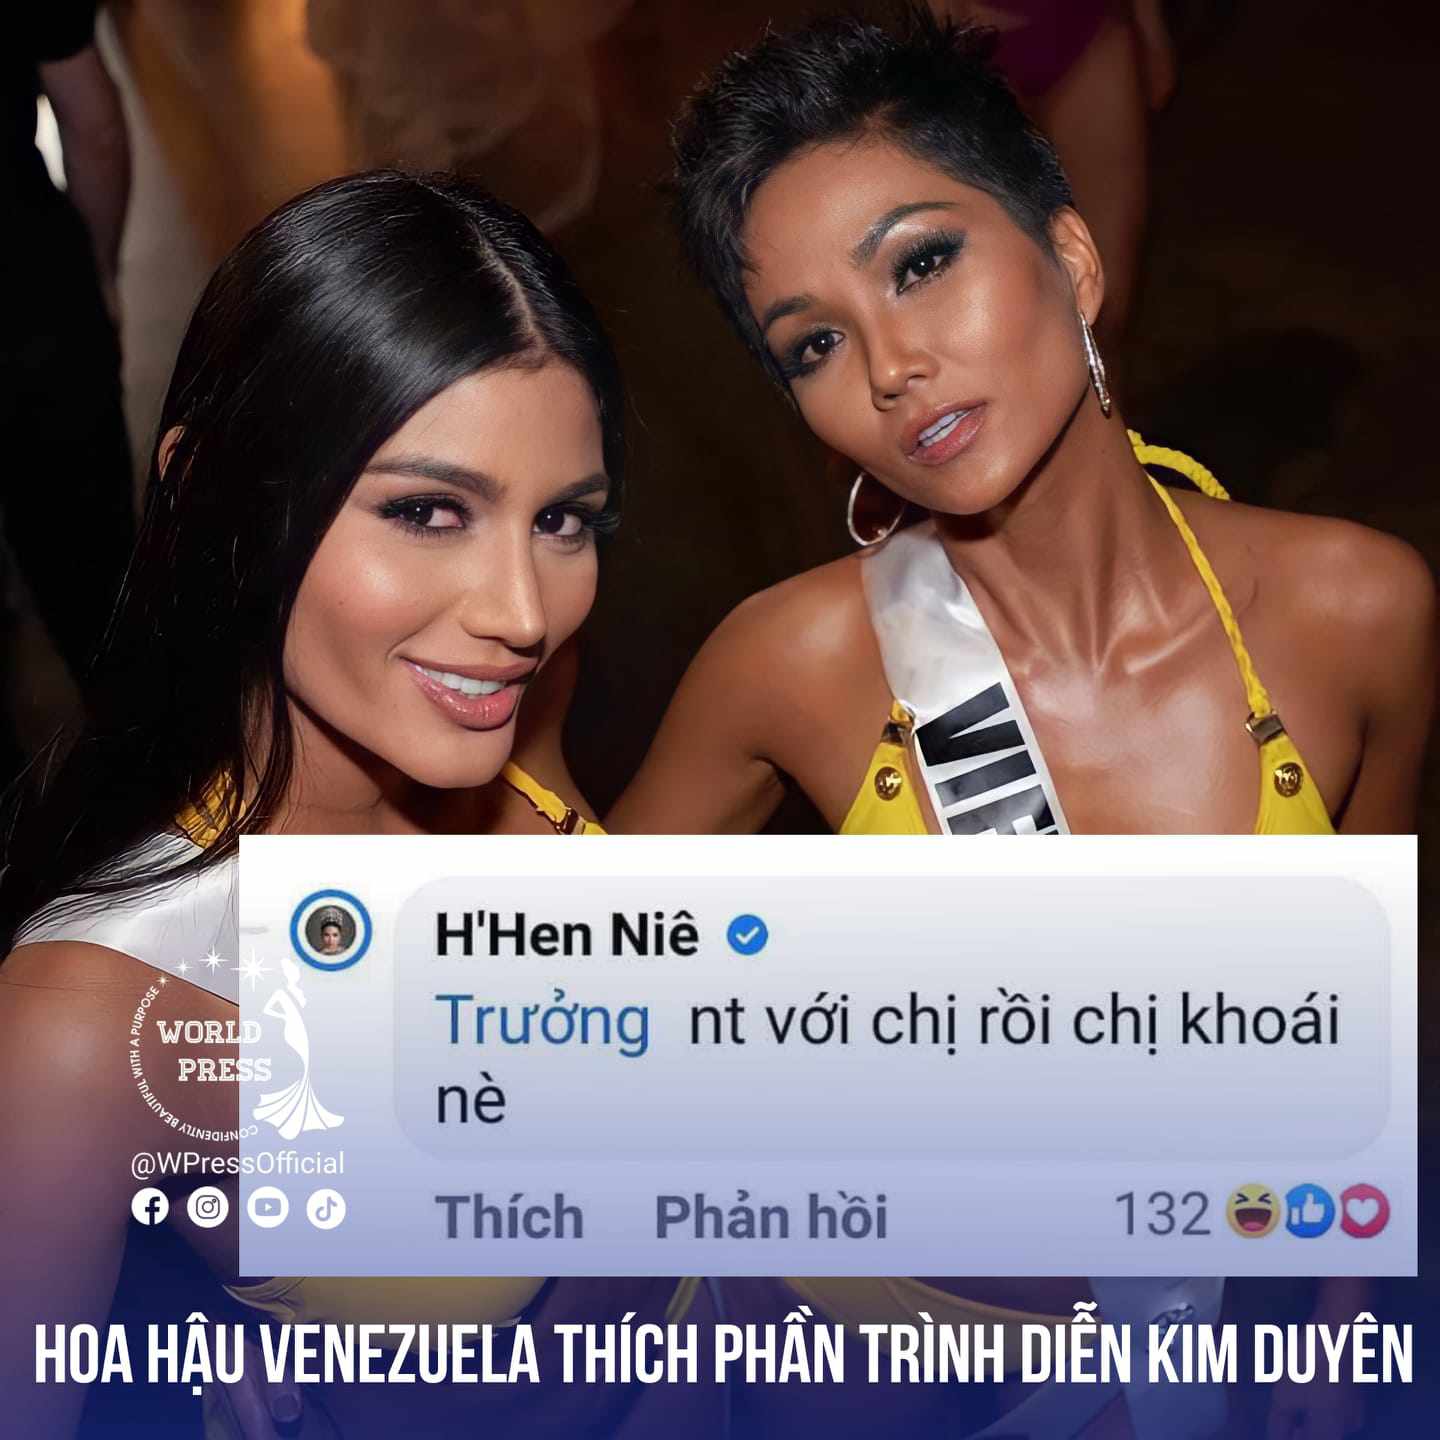 Minh oan cho Kim Duyên khi bị tố copy “giao diện” của á hậu Venezuela, Hamp;#39;Hen Niê vào cuộc - 7